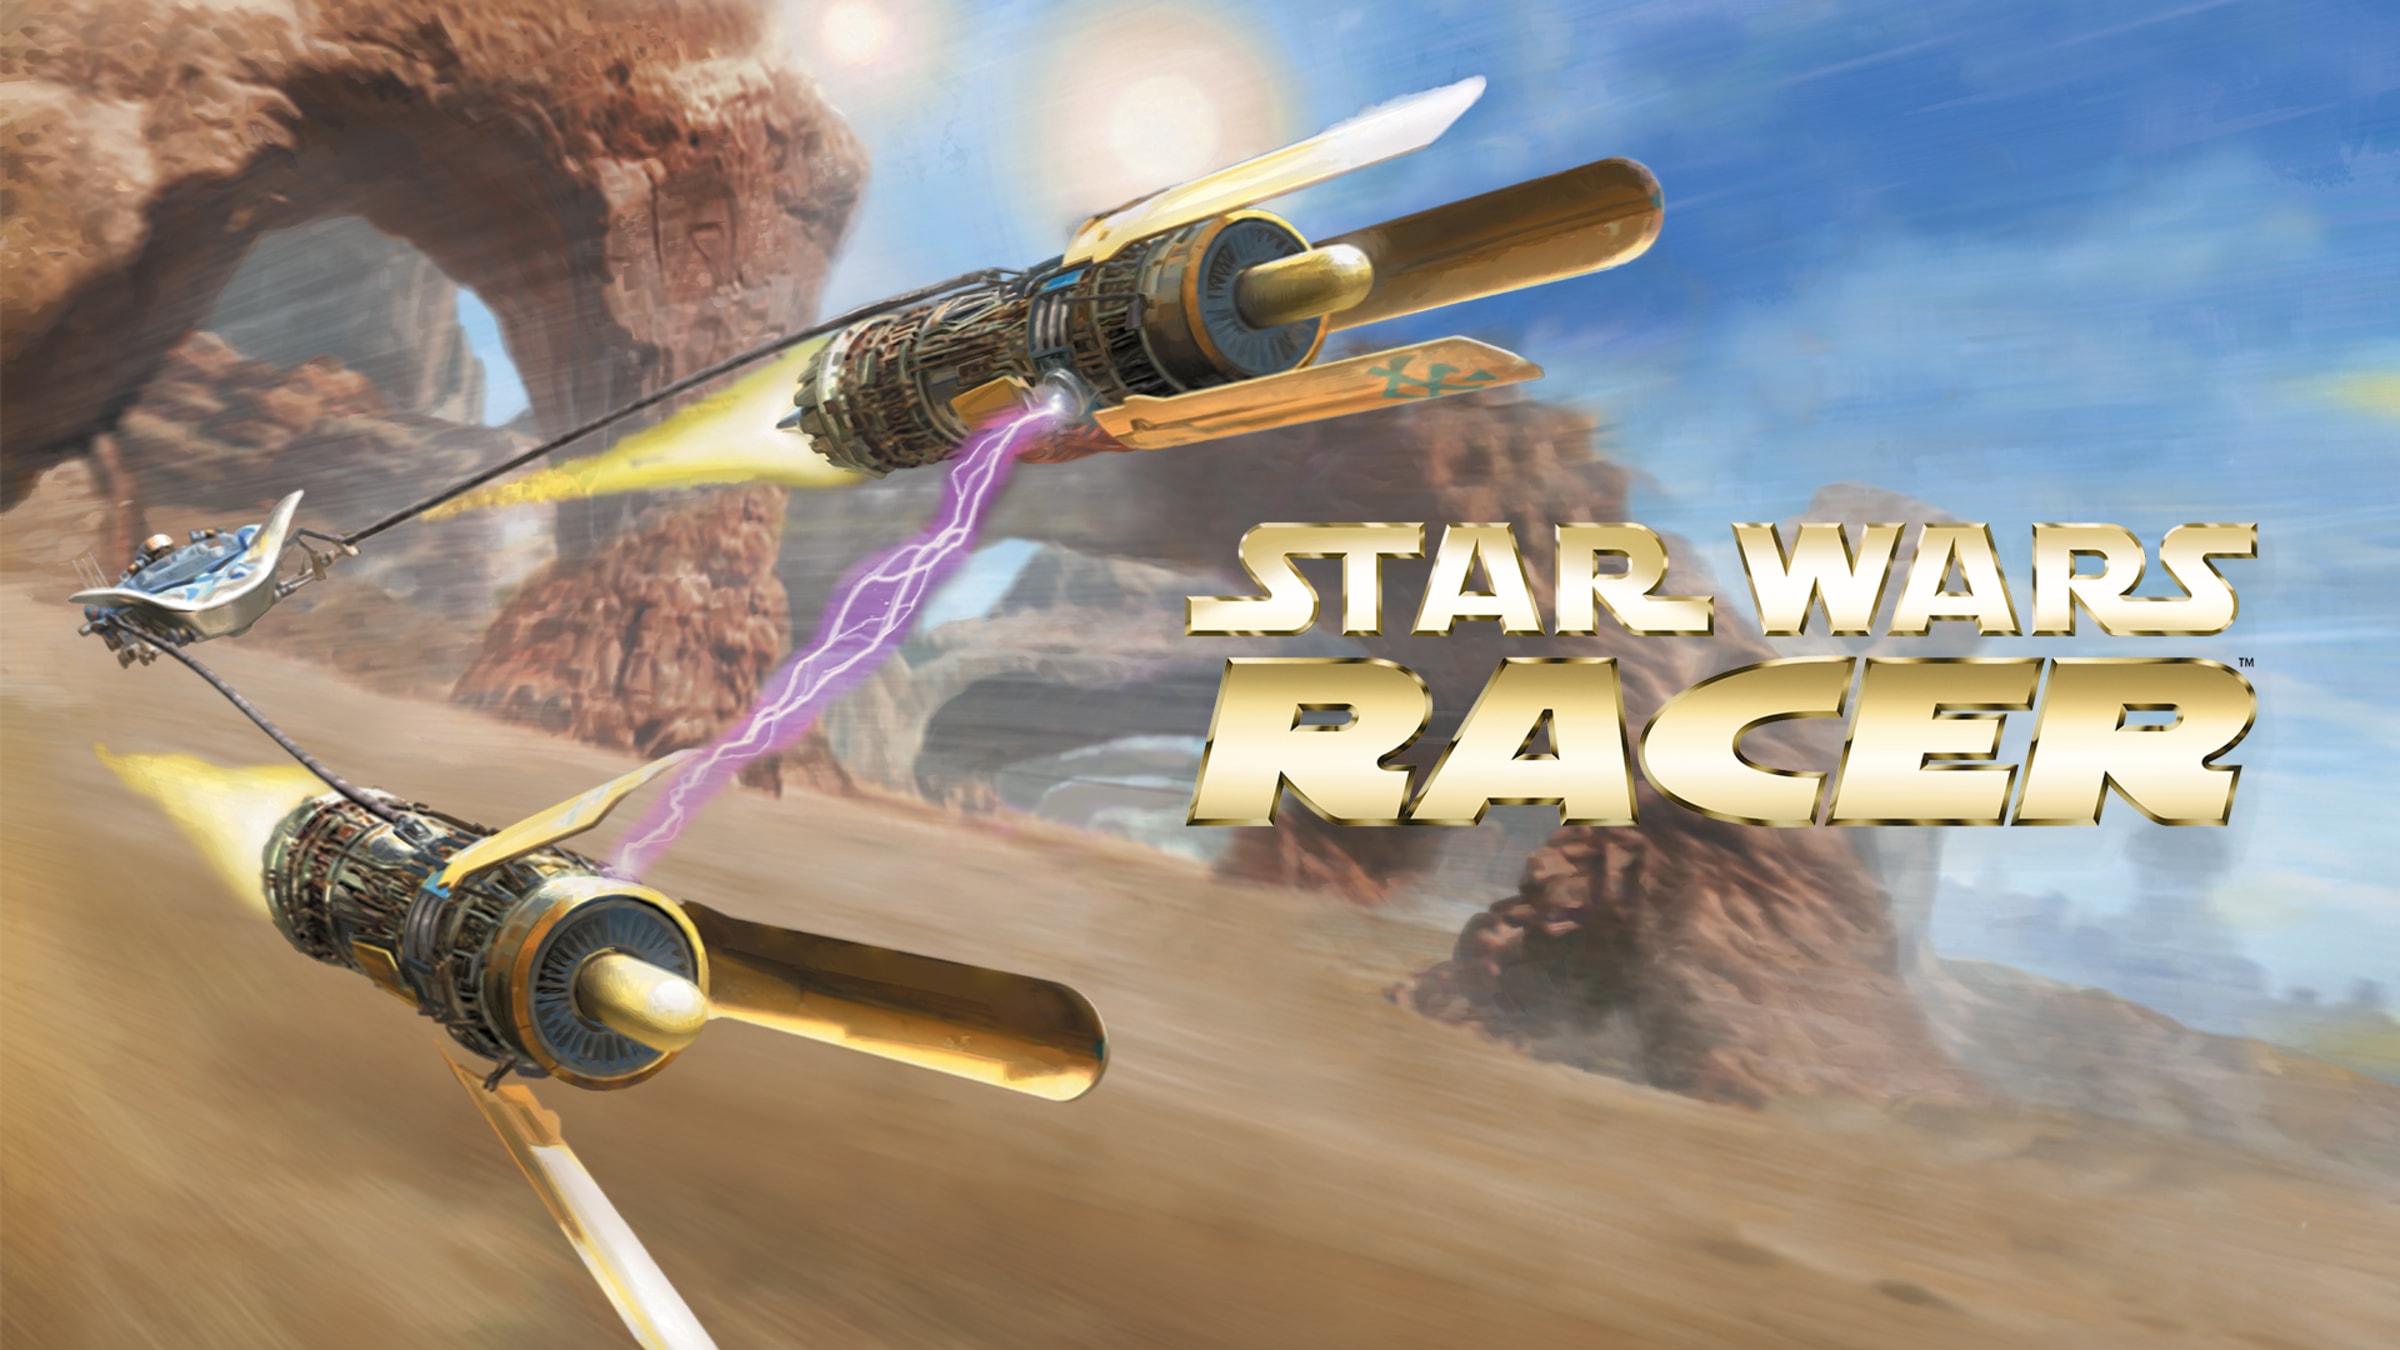 STAR WARS™ Episode I Racer for Nintendo Switch - Nintendo Official Site